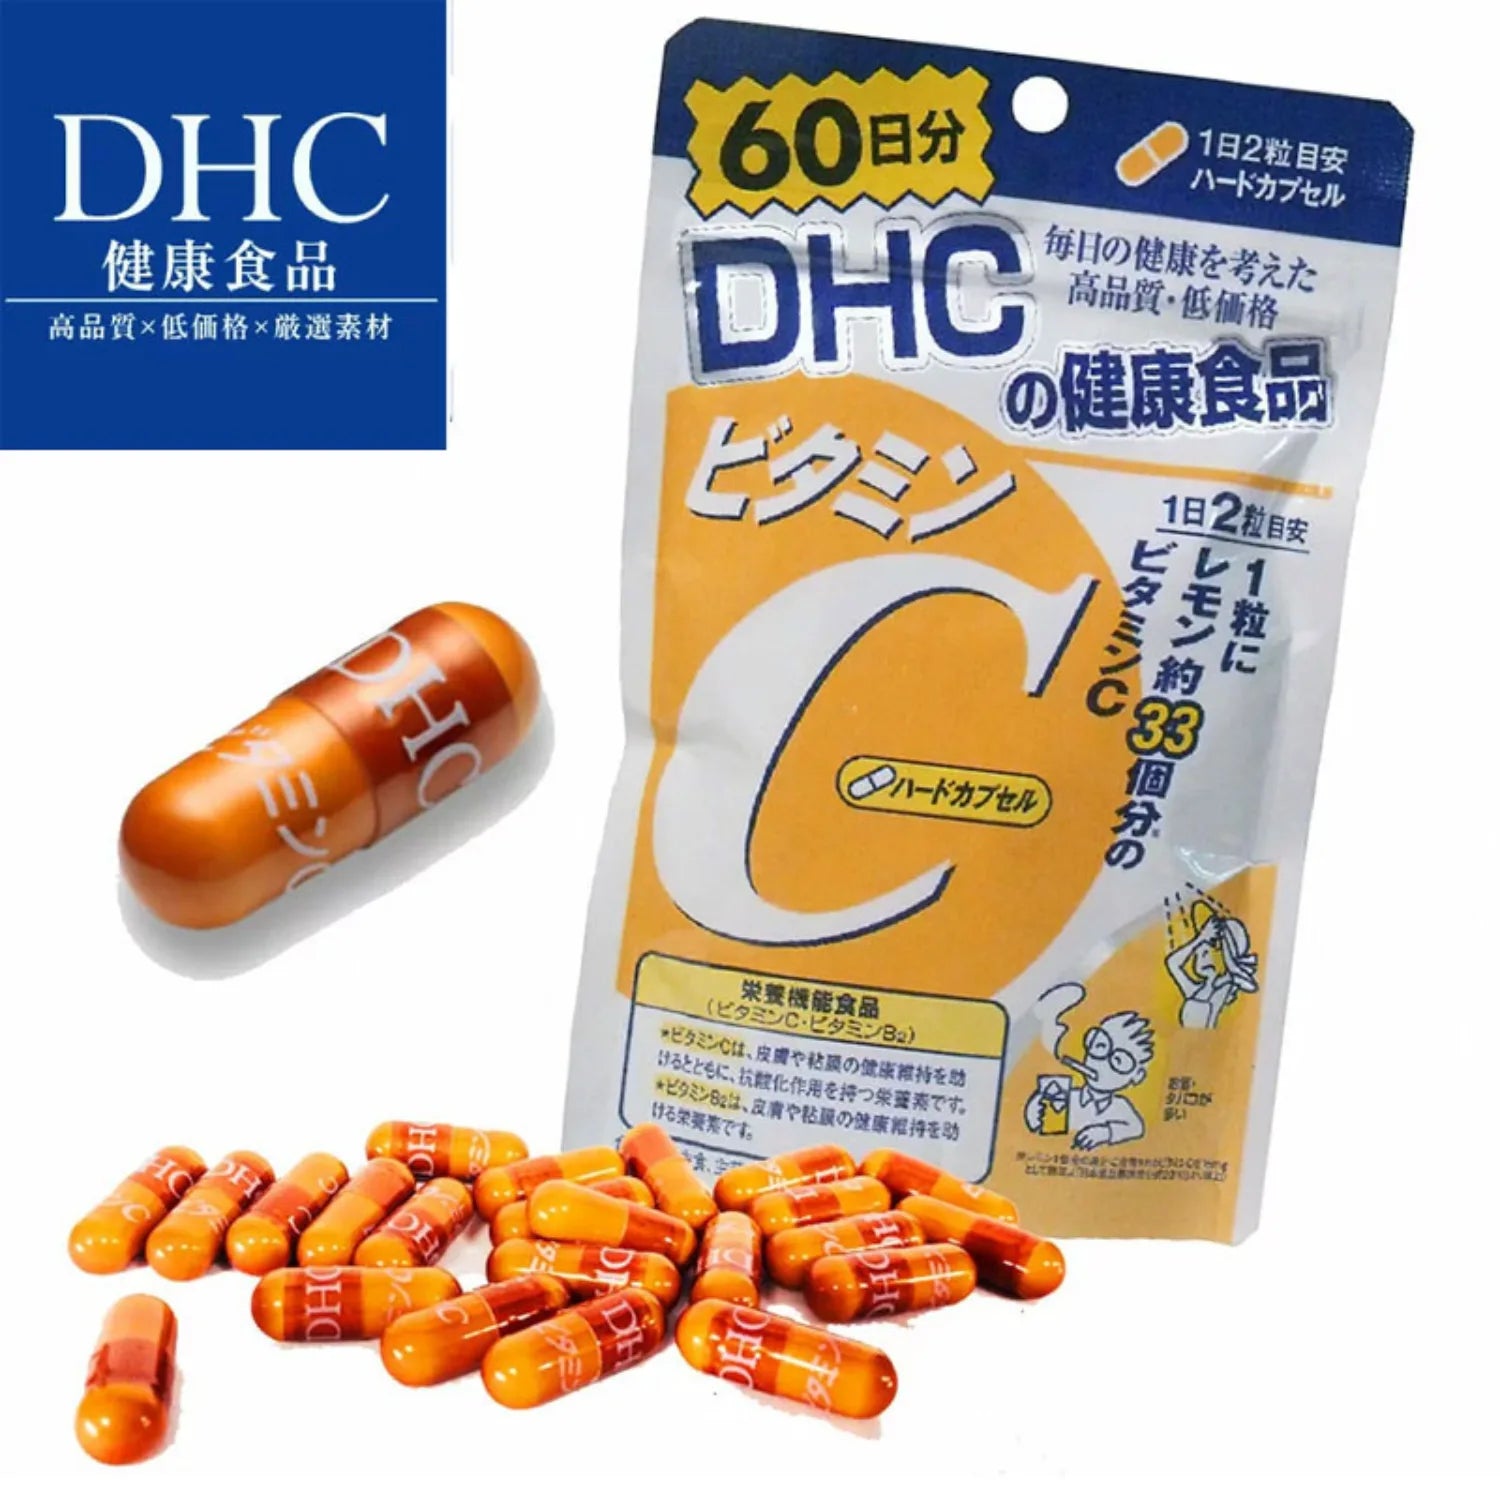 DHC Vitamin C 1.000mg 60-day Supply (120 Capsules) - Buy Me Japan